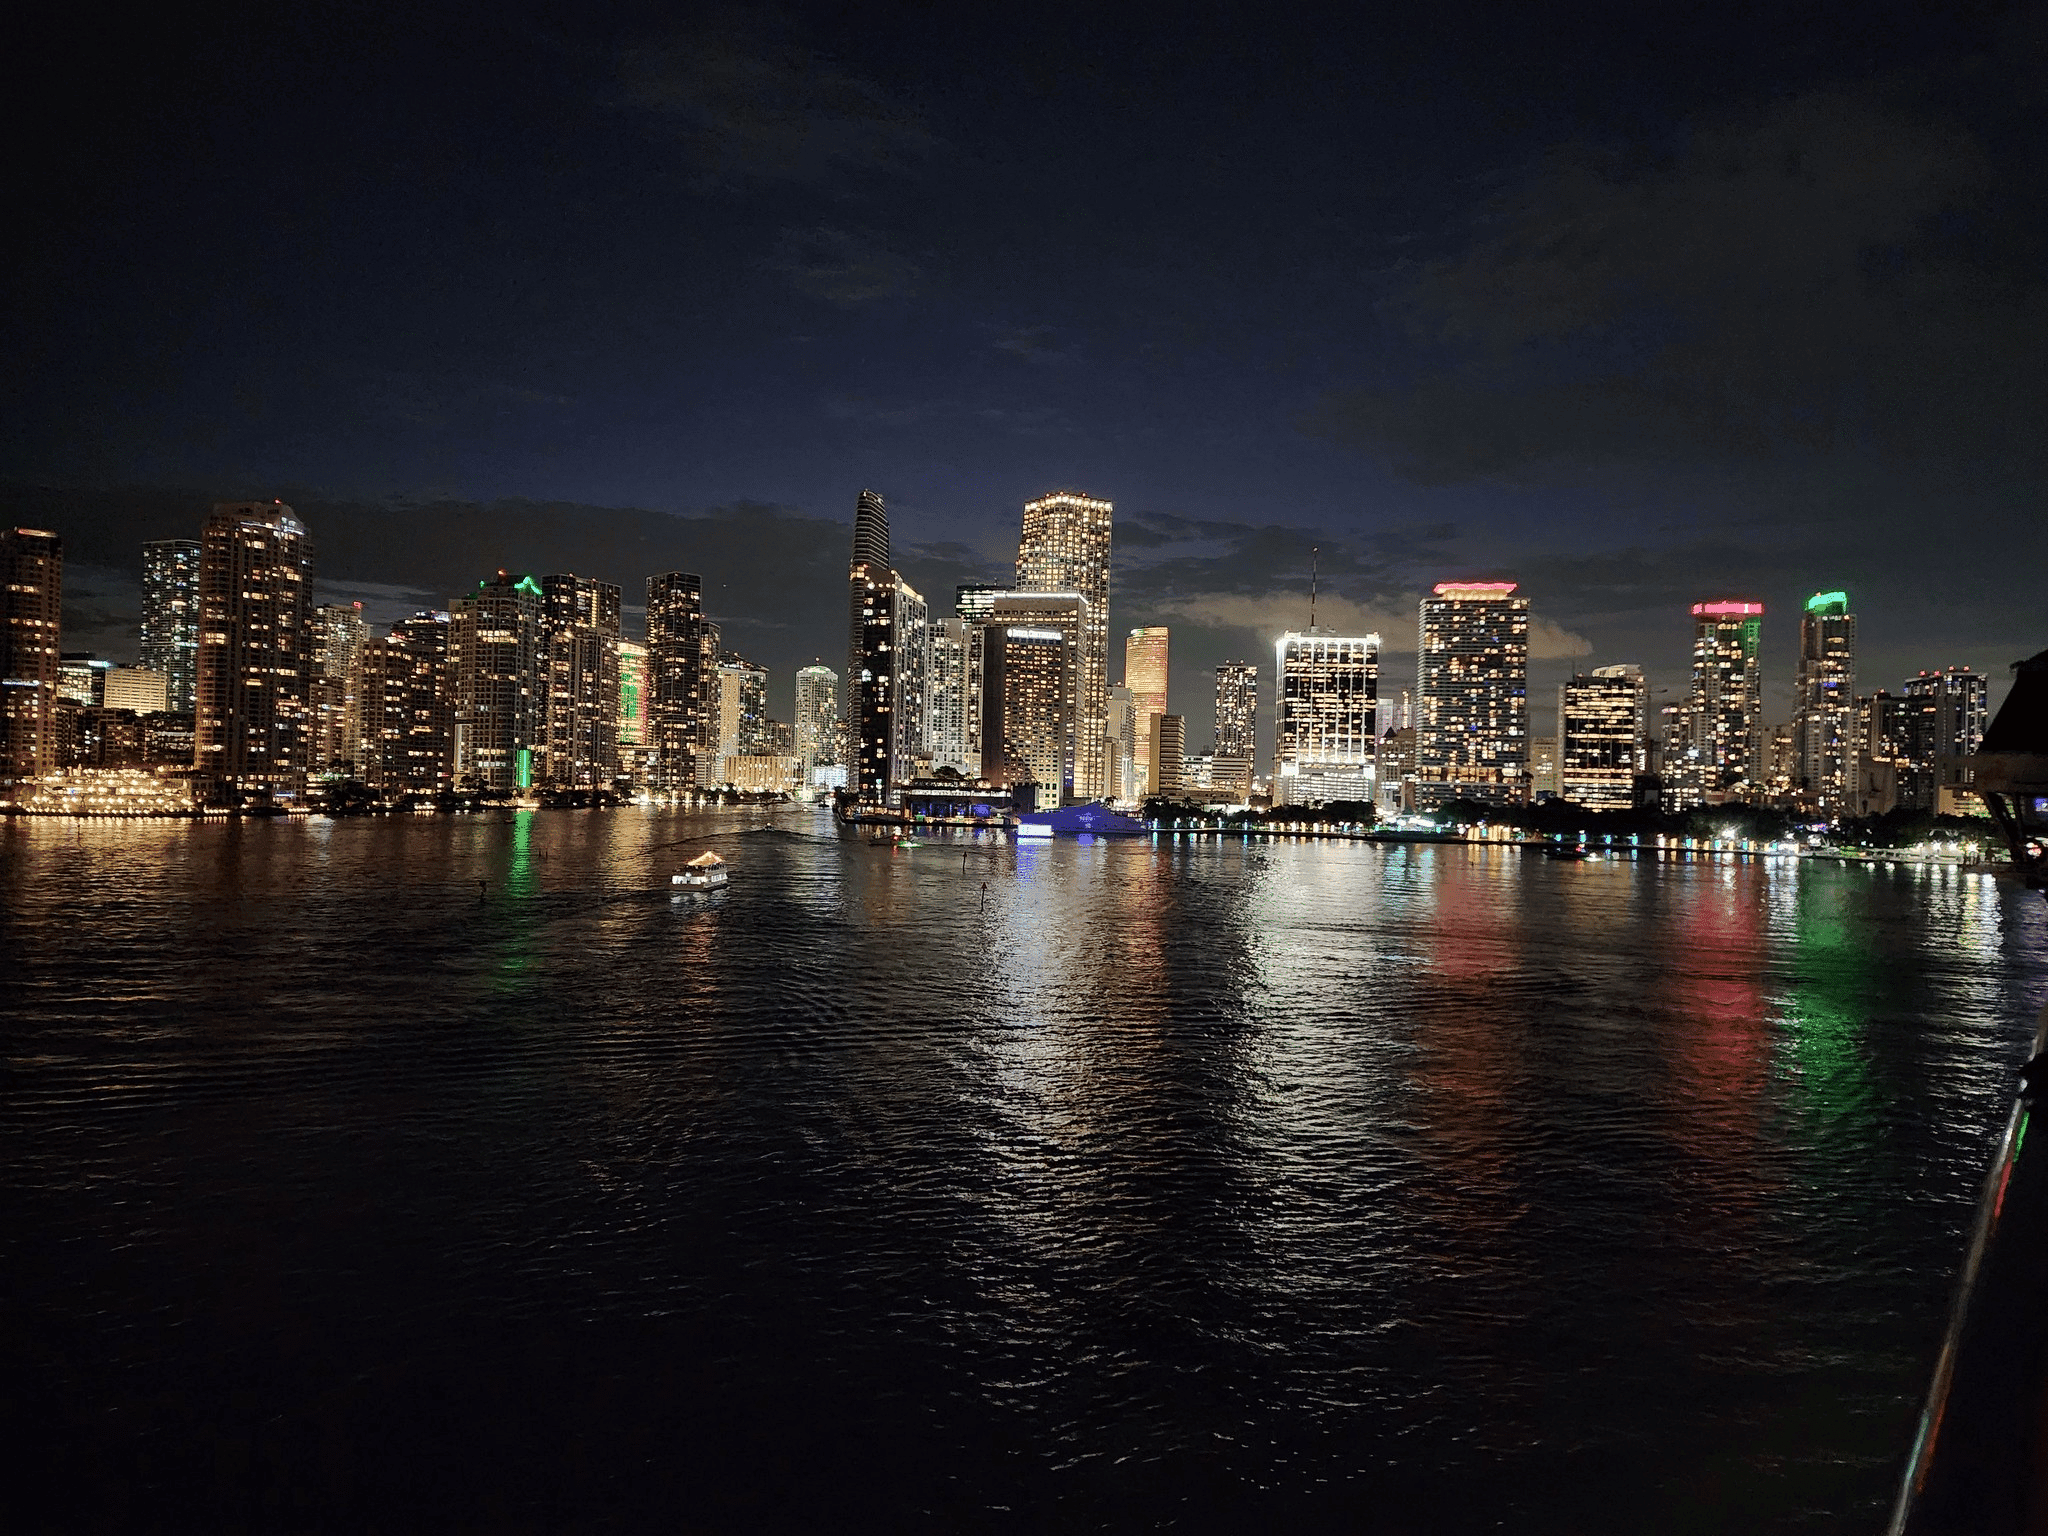 The skyline of Panama City by night.